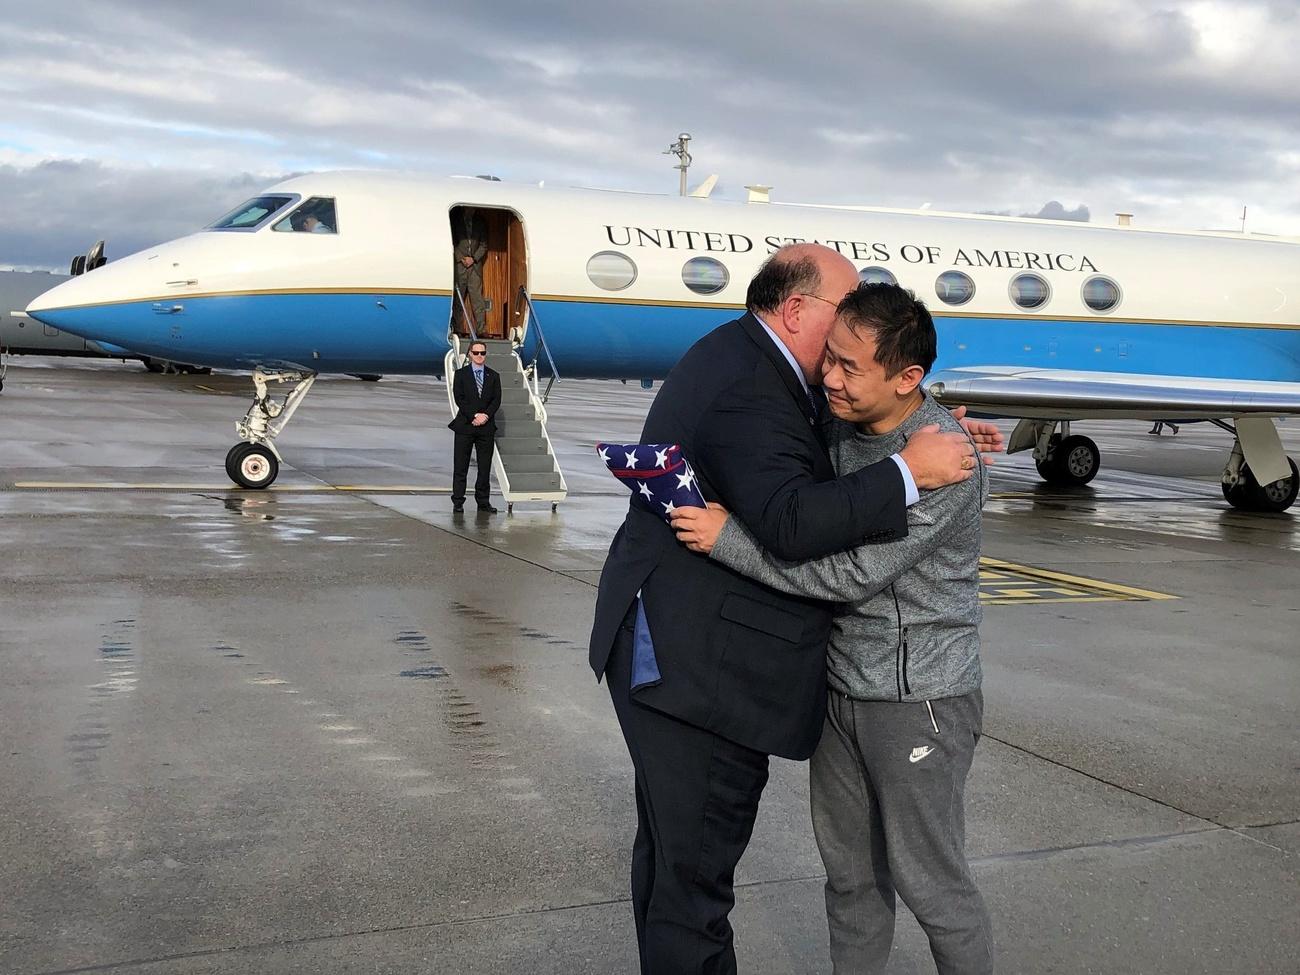 US ambassador hugs freed detainee on airport runway